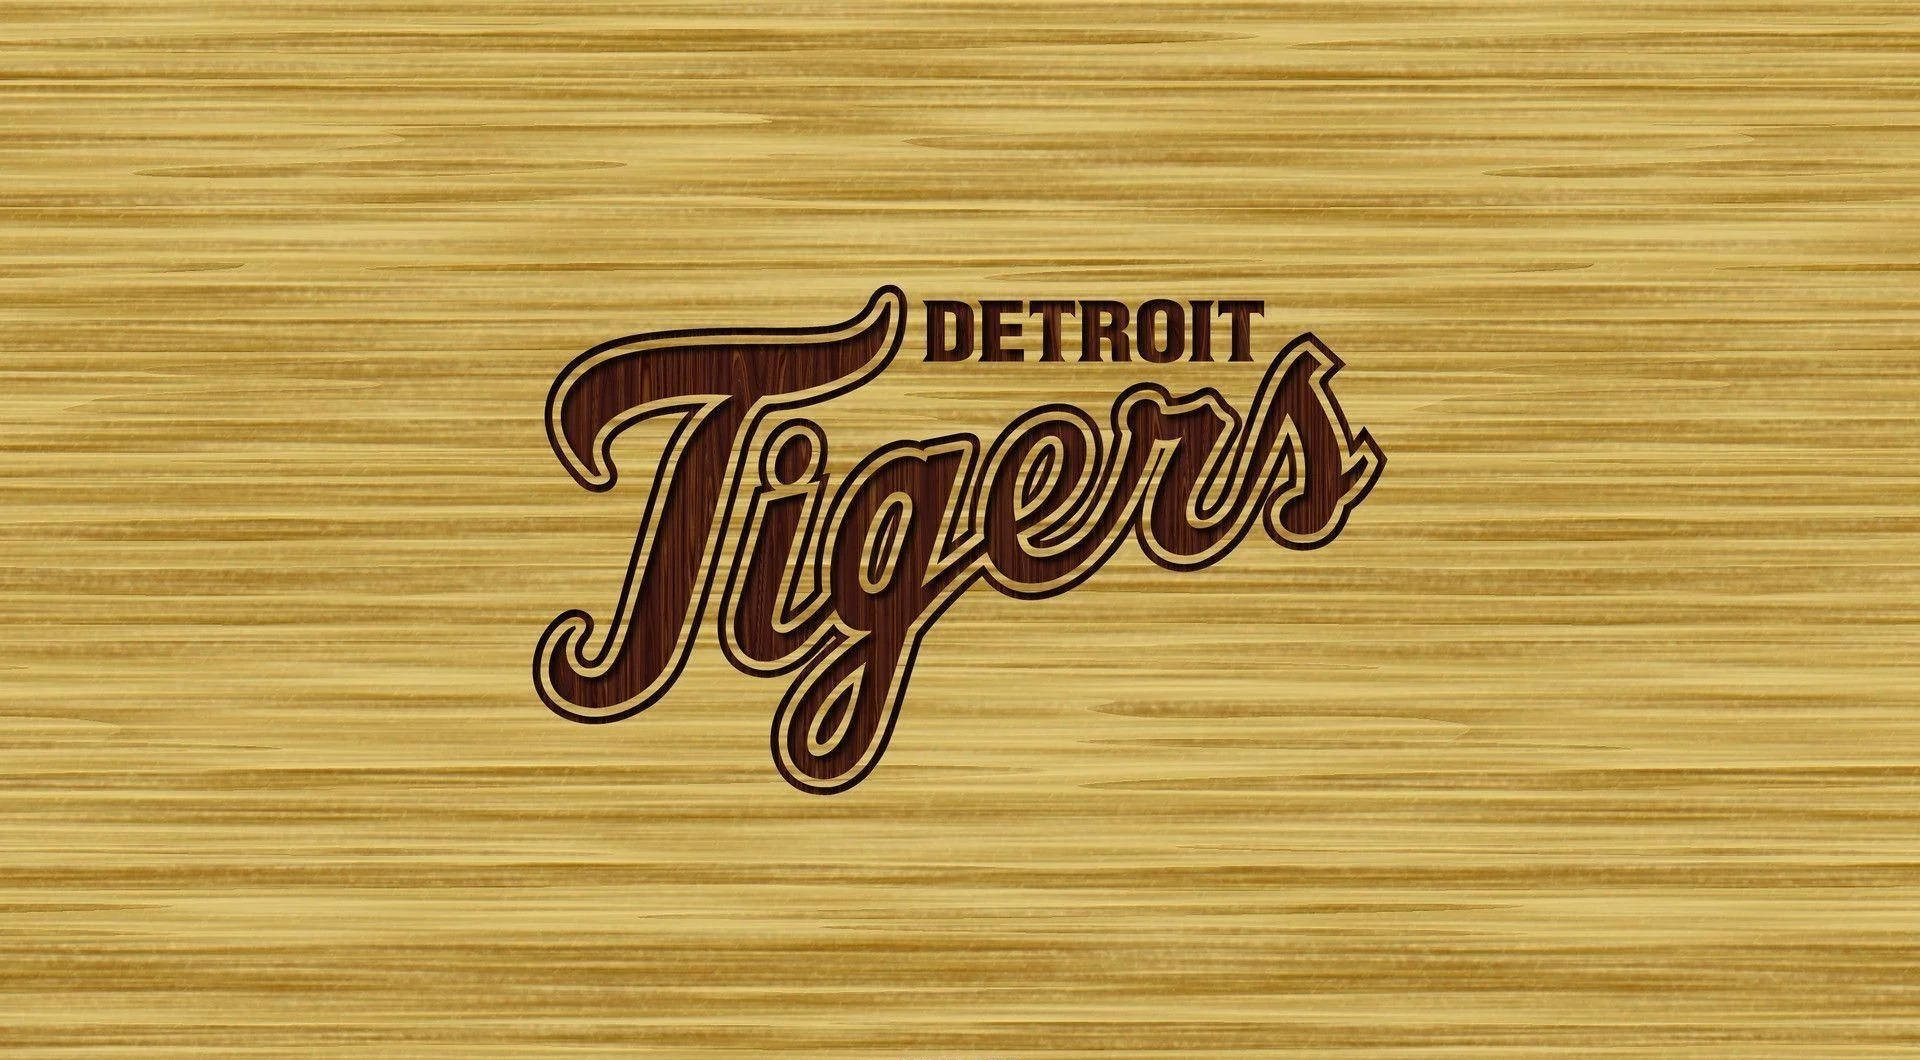 Imágenes De Detroit Tigers